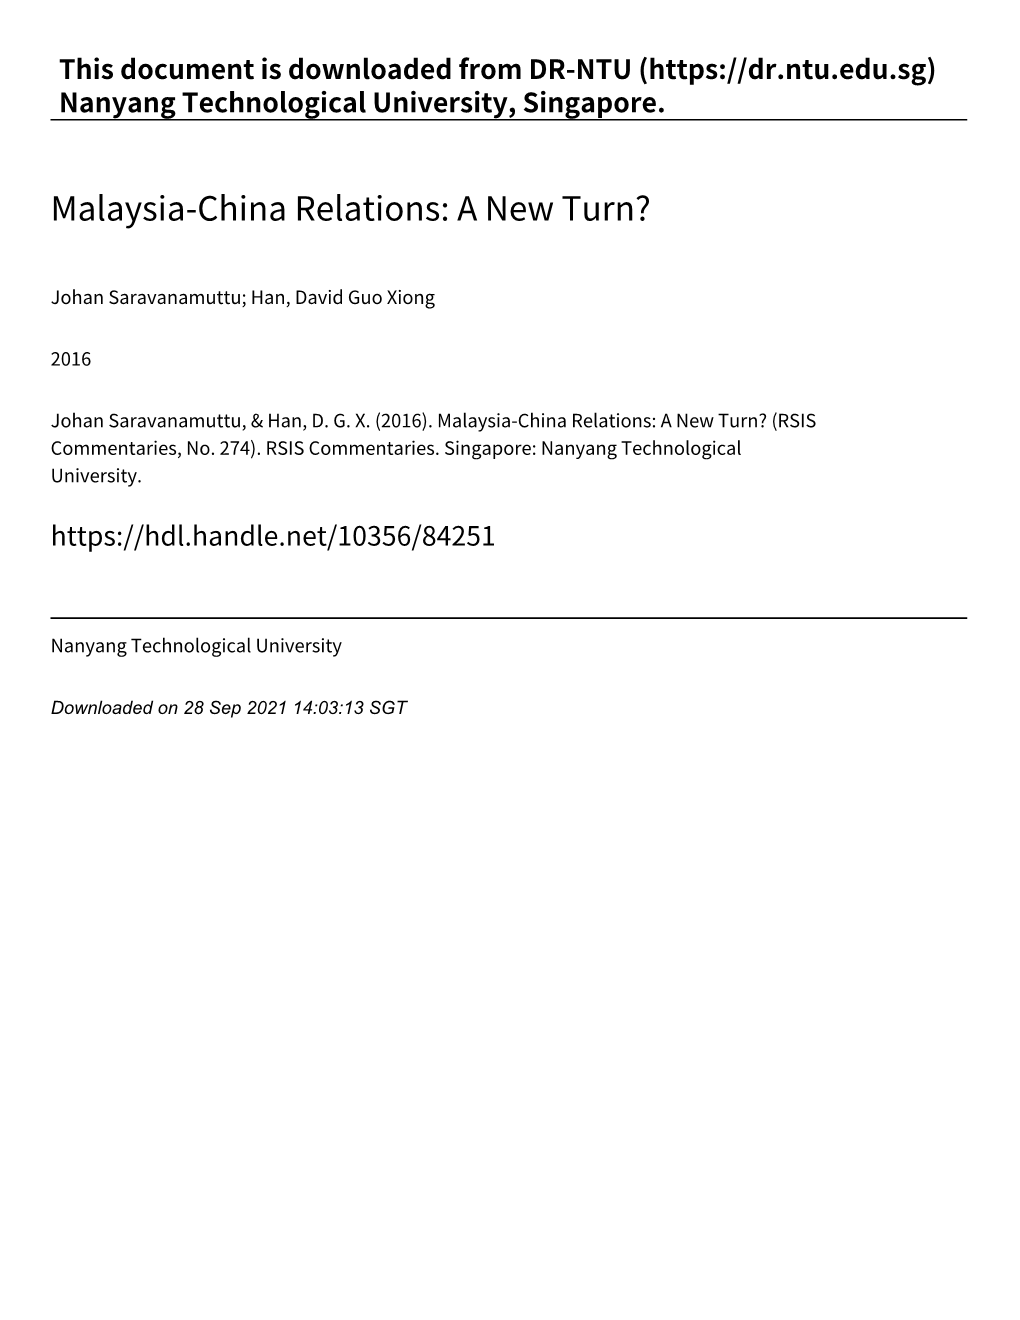 Malaysia‑China Relations: a New Turn?